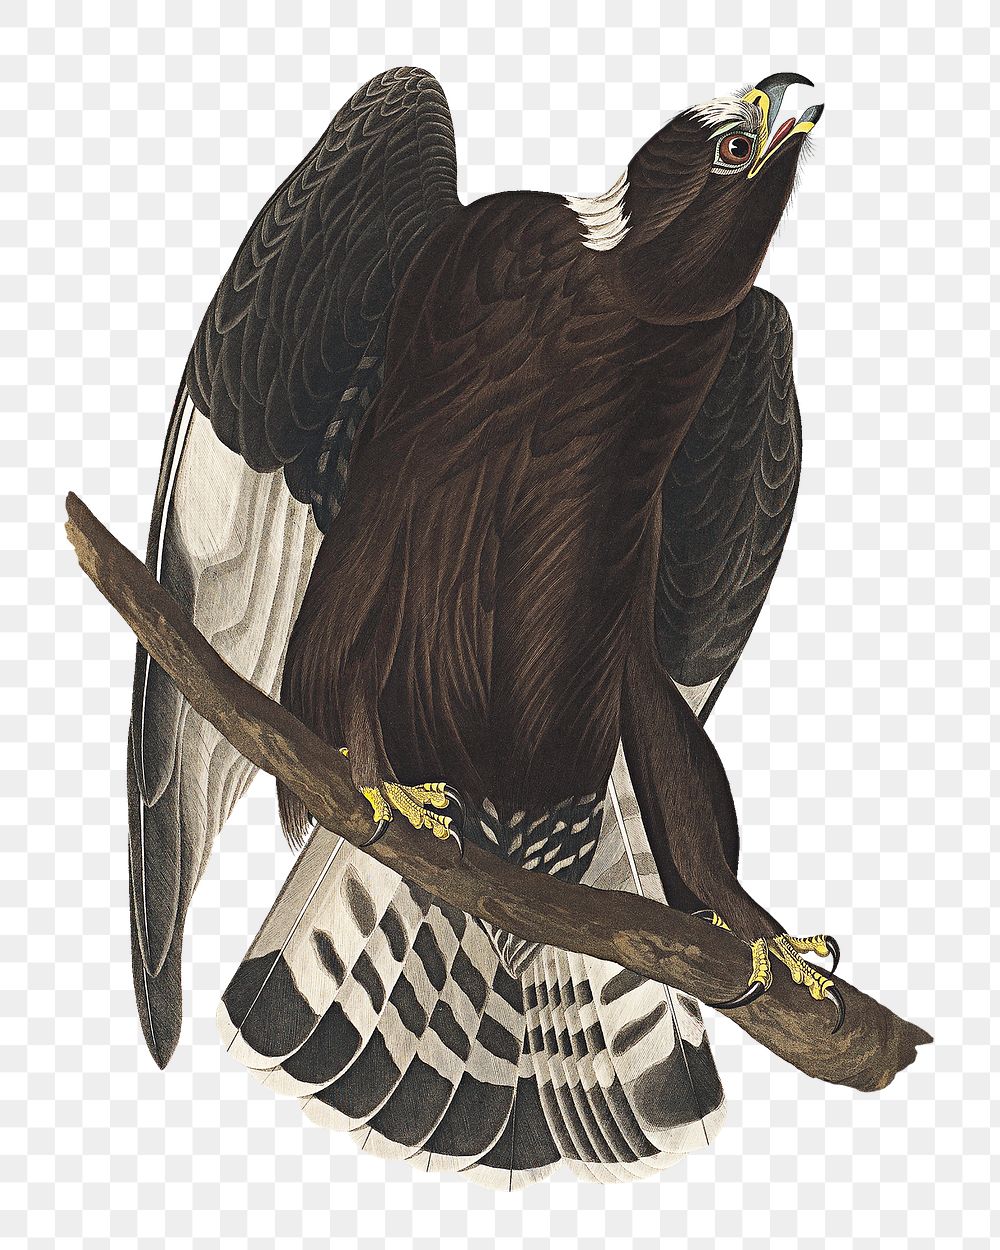 Rough-legged falcon png bird sticker, transparent background